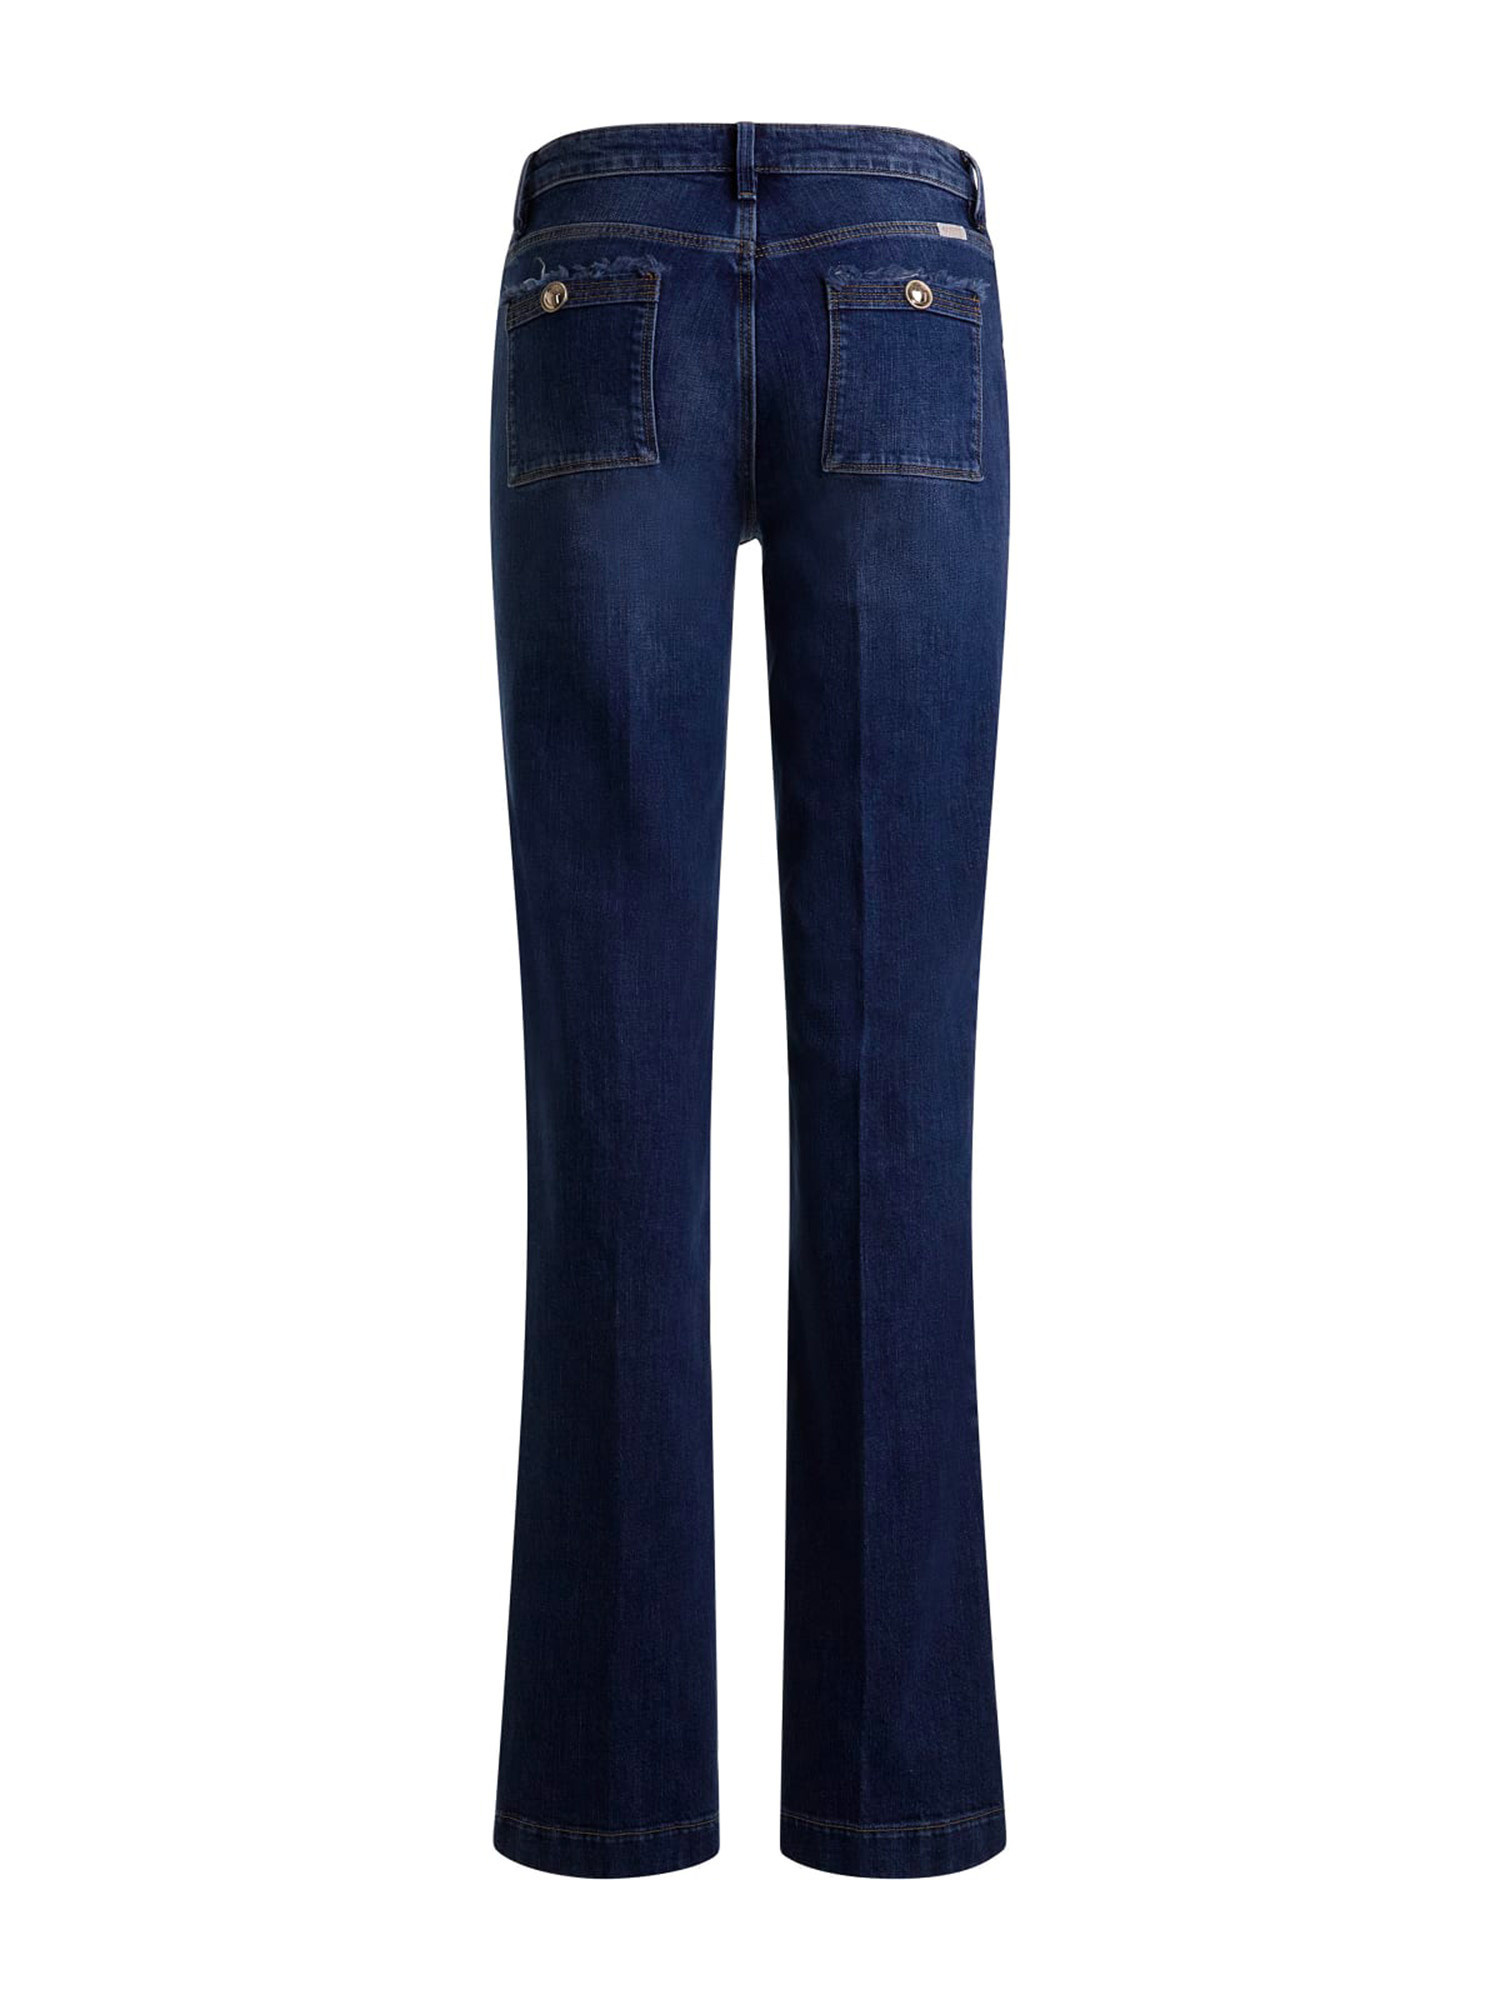 Guess - Straight 5-pocket jeans, Dark Blue, large image number 1